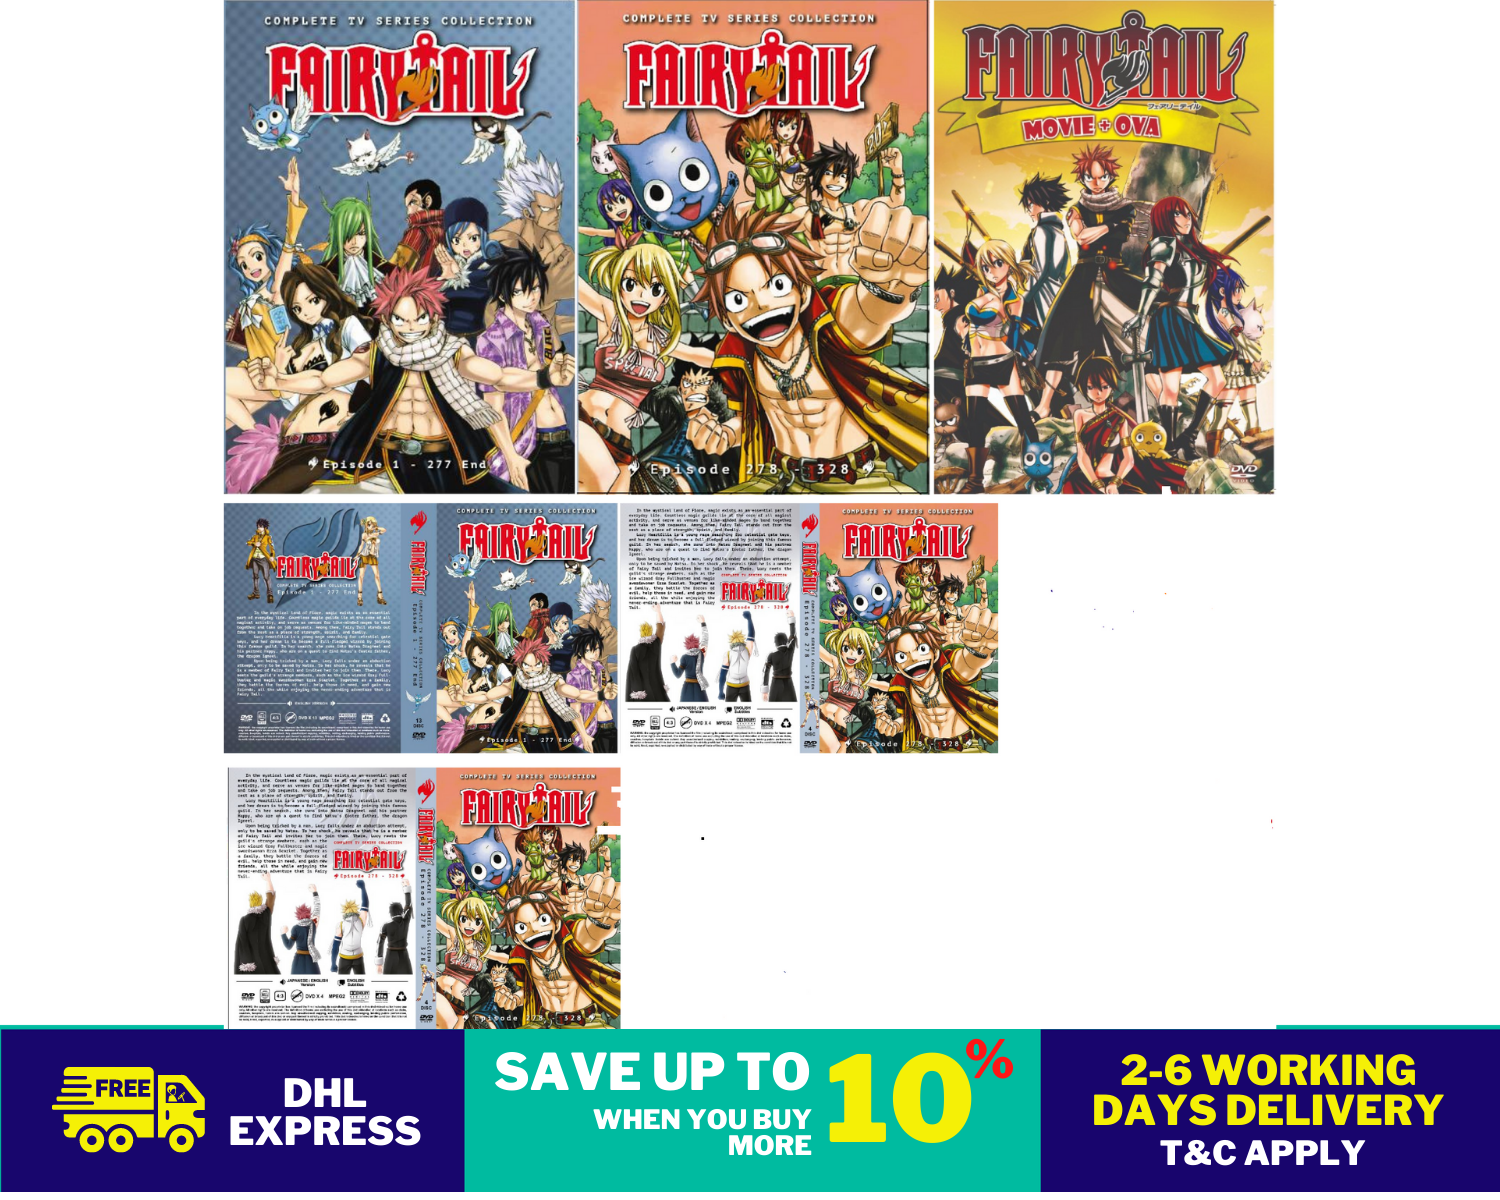 DVD Anime Fairy Tail (Epi 1 - 328 End) + MOVIE + OVA Complete English Dubbed  DHL | eBay